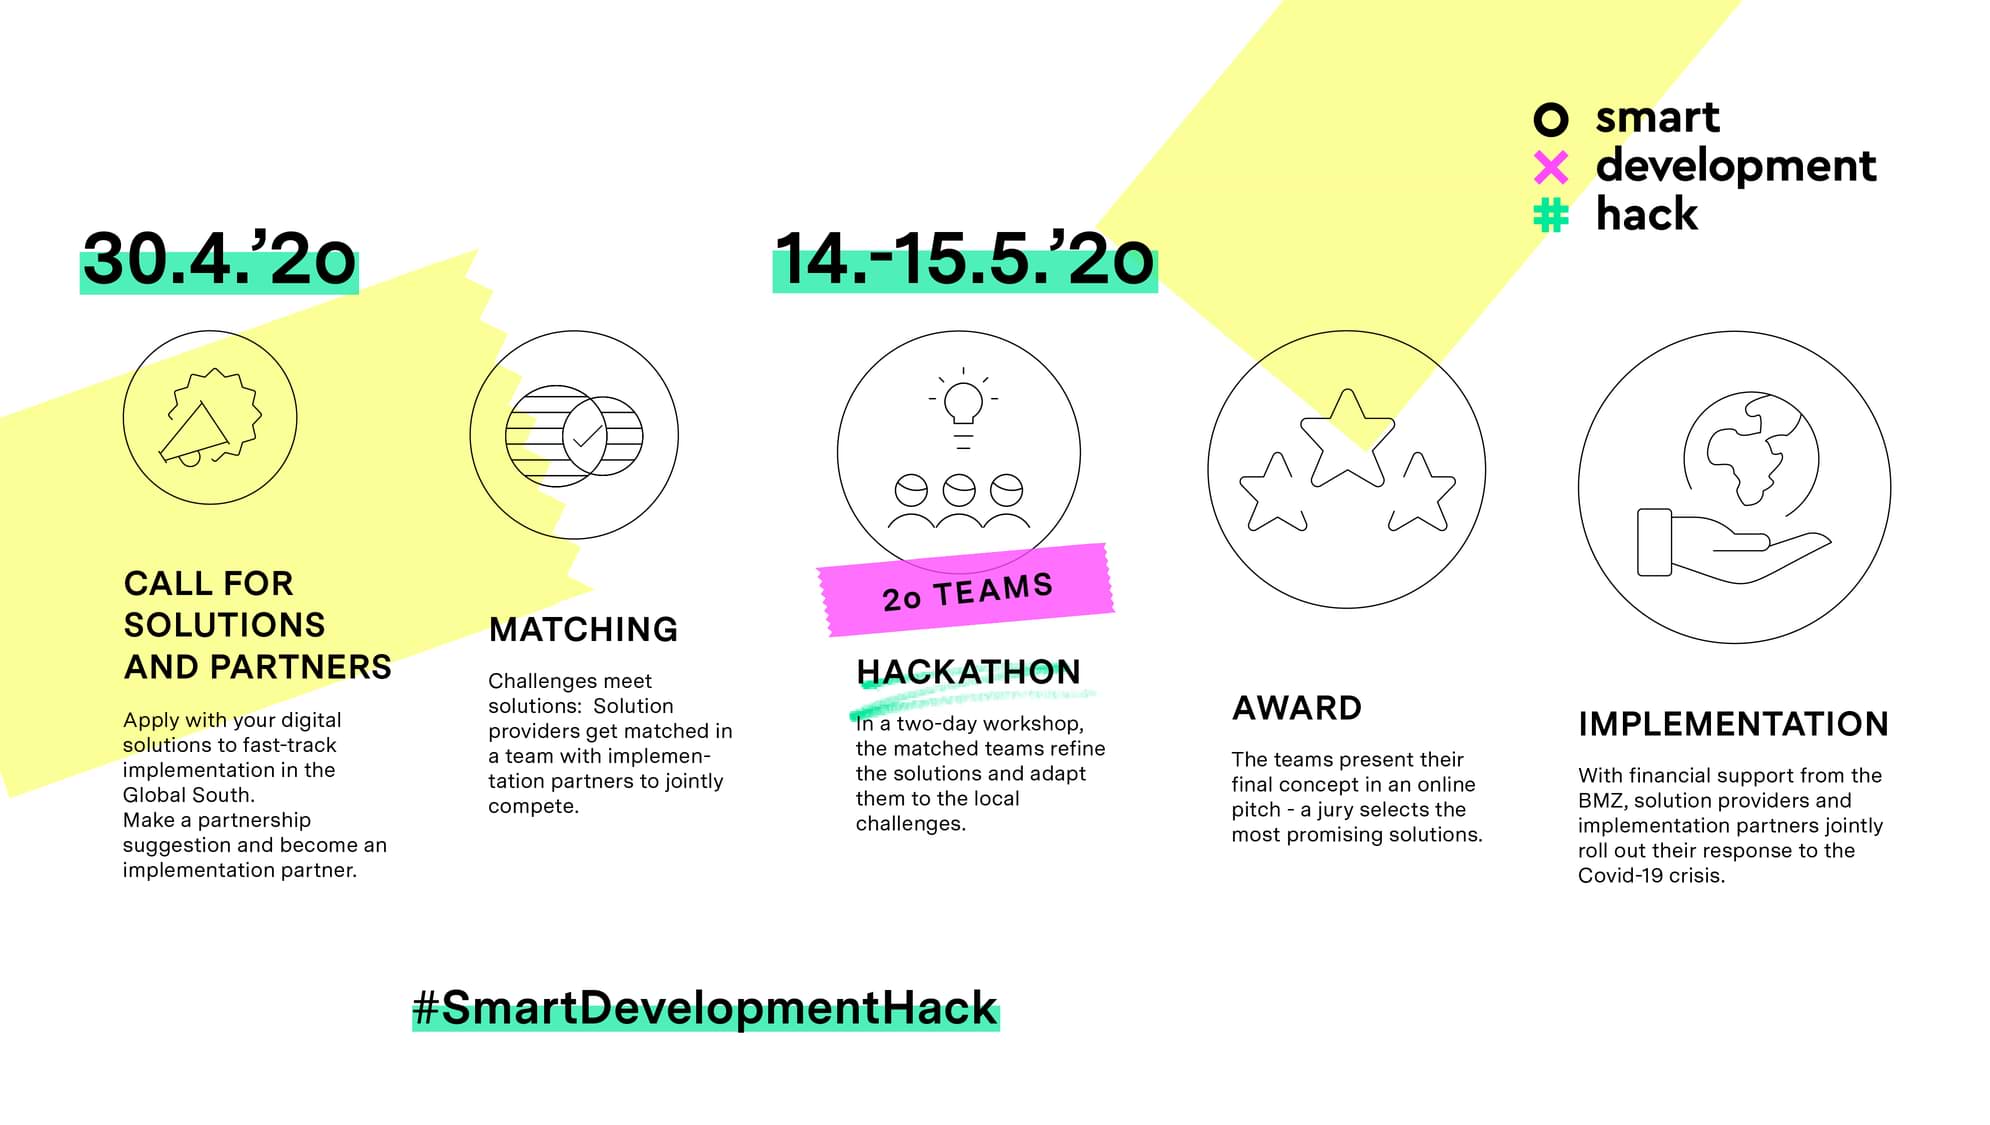 CIEC and the Smart Development Hack